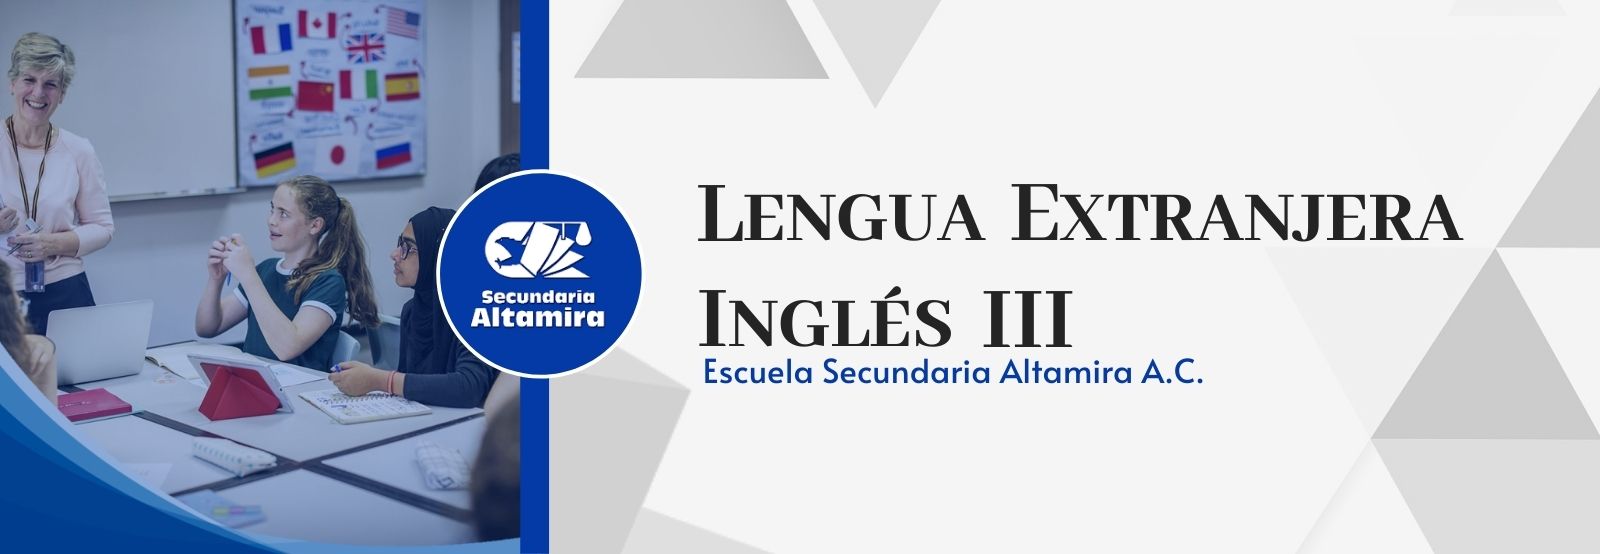 Lengua Extranjera. Inglés III